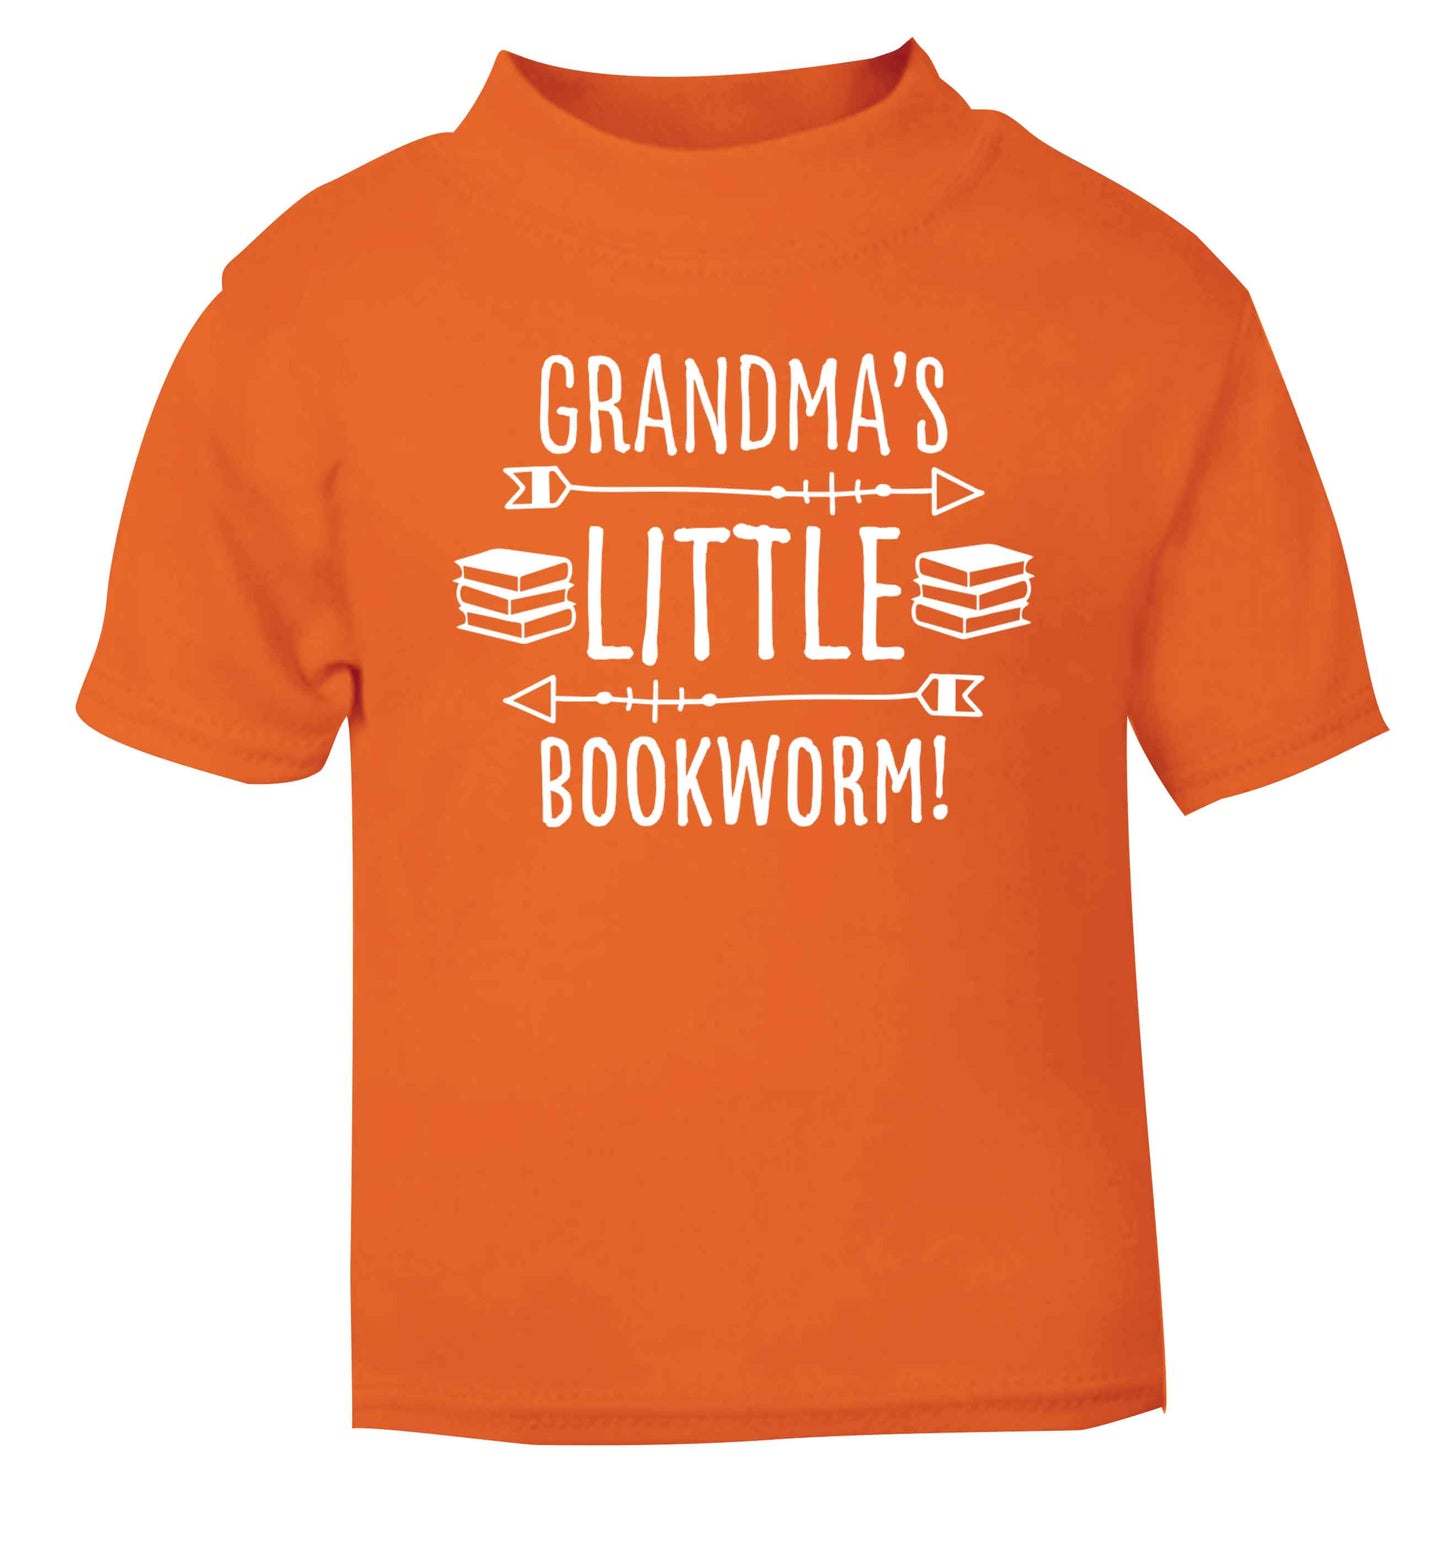 Grandma's little bookworm orange baby toddler Tshirt 2 Years